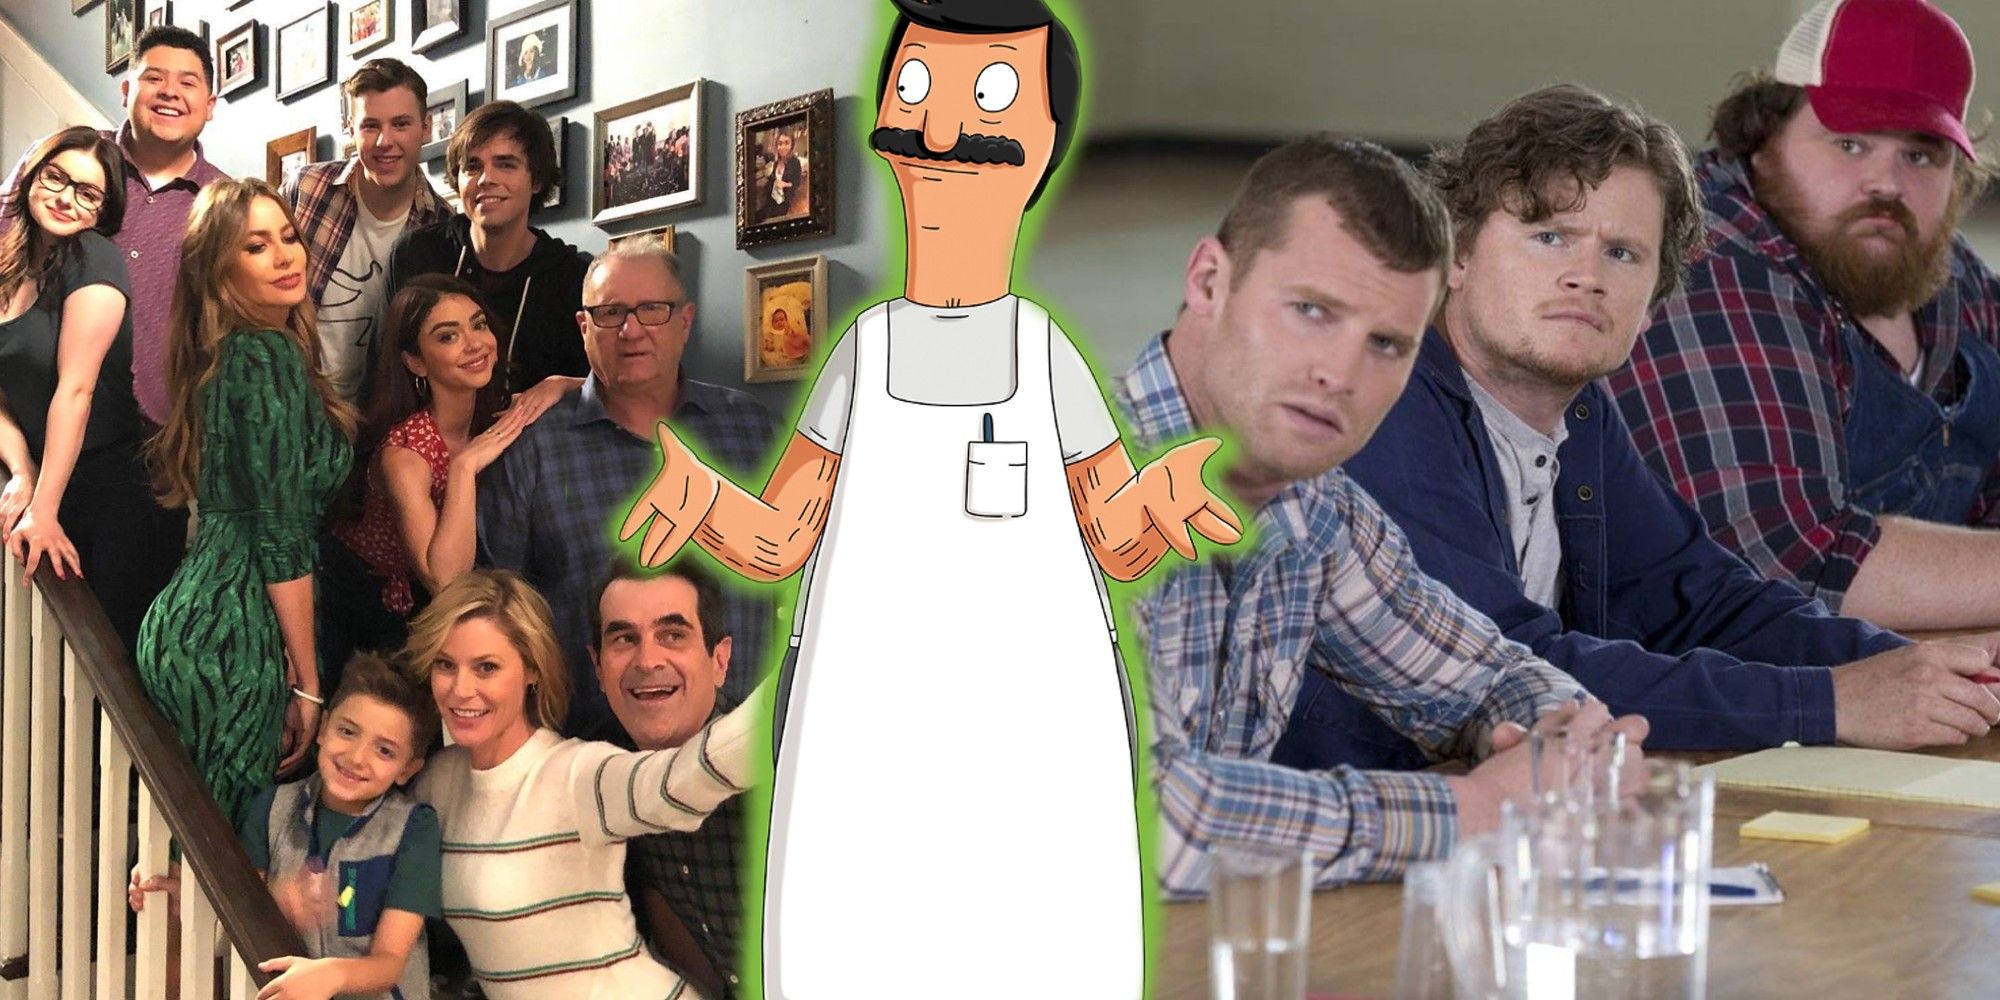 A split image of Modern Family, Bob Belcher from Bob's Burgers, Wayne, Darry, and Dan from Letterkenny